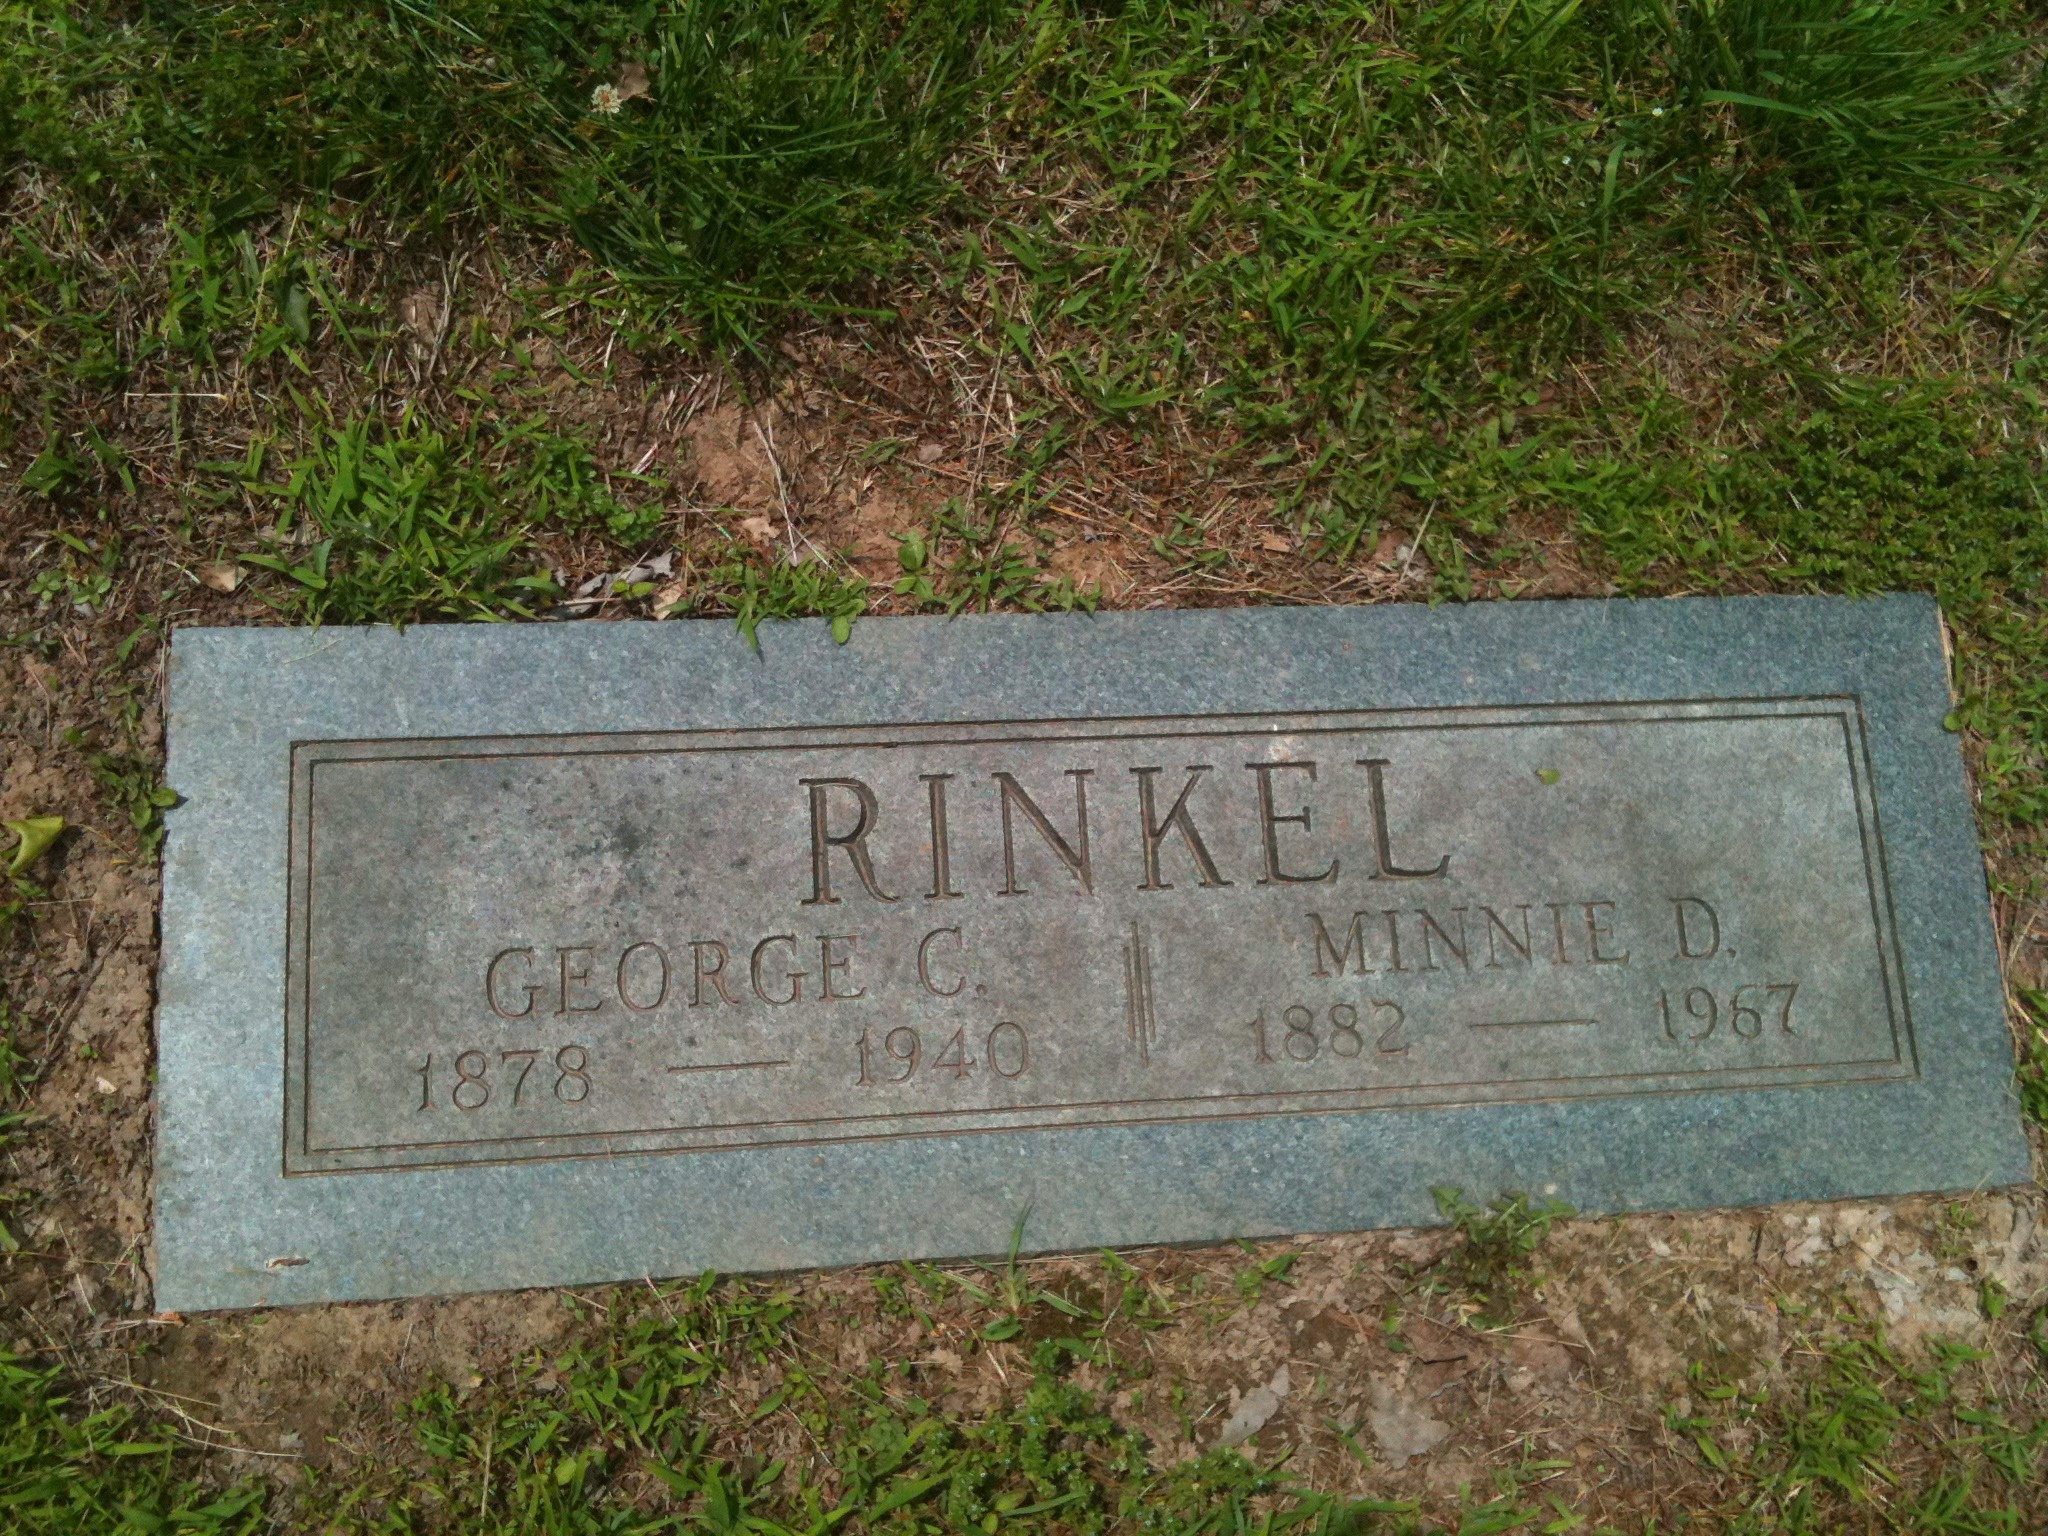 George C. and Minnie D. Rinkel Headstone